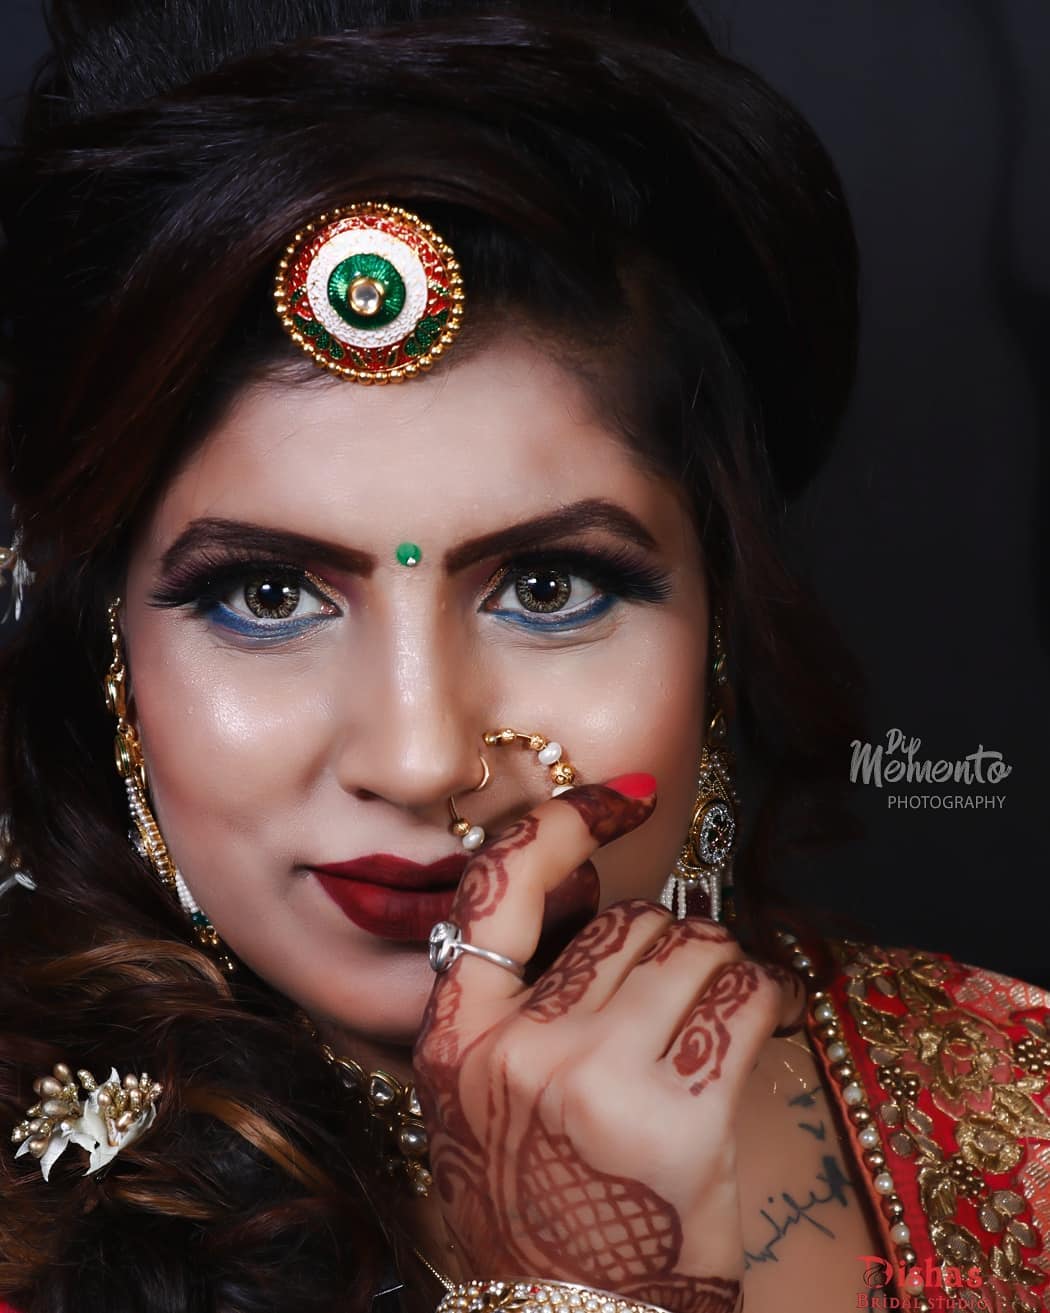 Treat your makeup like jewelry for the face..
.
Marwadi Bride
.
.
📸@dip_memento_photography
💄@dishasbridalstudio
.
.
 #brides #marwadibride #bridetobe
#coolbrides #bigfatindianwedding #bridemakeup #indianwedding #photography #weddings #indianwedding #101
#dipmementophotography #9924227745 #loveformakeup #marwari #makeupartist #makeup #ahmedabad #candidportraits #indianbride #indianfashionblogger #marwadistyle #rajasthanibride #brides #funbrides
.
.
@wedzo.in @indianstreetfashion @weddingz.in @indian_wedding_bliss
@dulhaanddulhan @thebridesofindia @indianweddings @weddingdream @indianweddingbuzz @shaadisaga @zo_wed @desiclassybrides @weddingwireindia @indiagramwedding @shaadisaga @indian__wedding @thebridesofindia
@weddingsutra @wedmegood @bridalaffairind @theweddingbrigade @weddingplz @weddingfables @indian_wedding_inspiration @eventilaindia @_punjabi_weddings